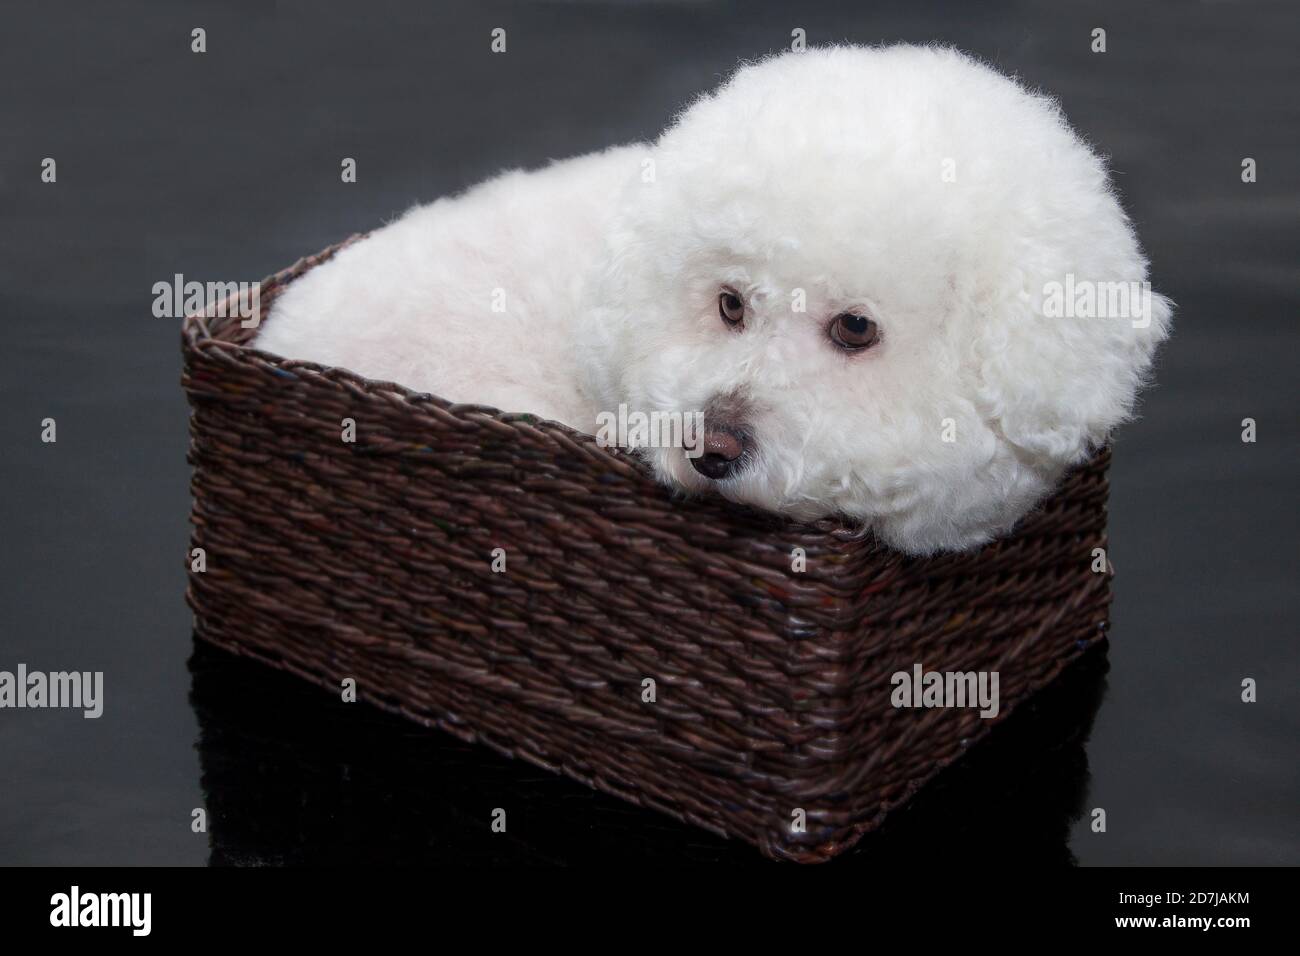 Cute bichon frise is sitting in a wicker basket. Pet animals. Stock Photo